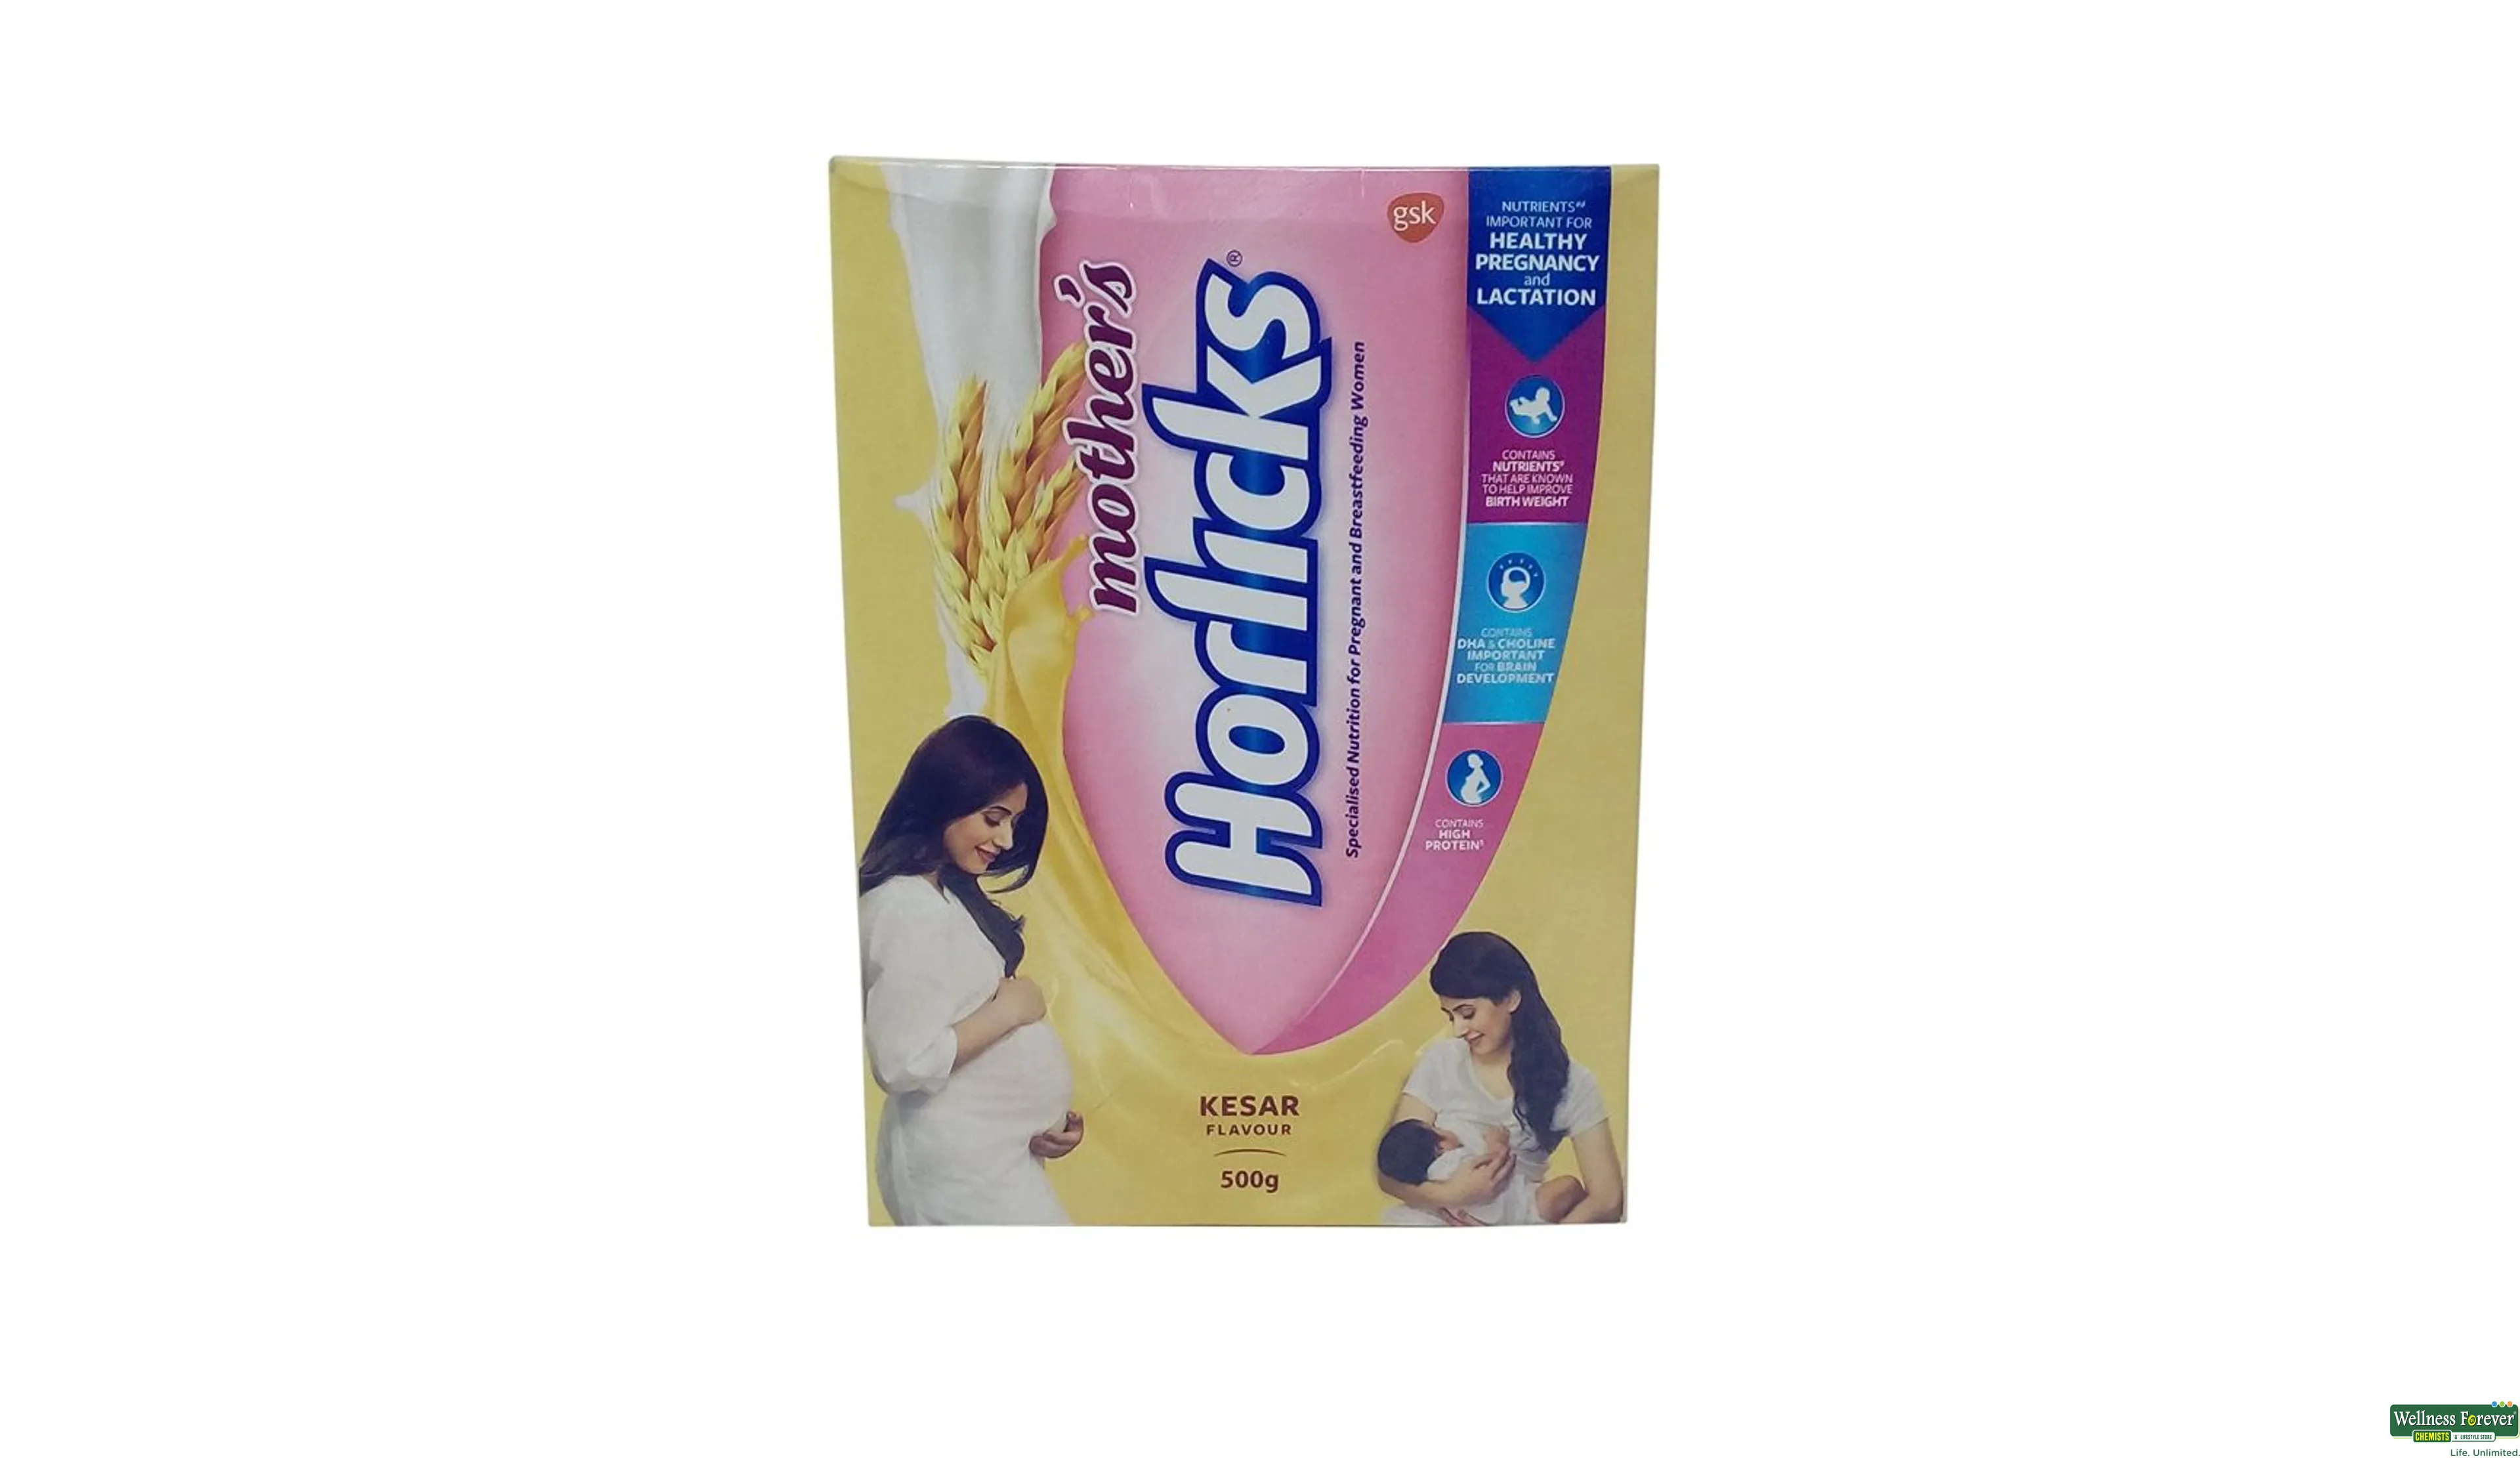 Mother's Plus,Horlicks Health Drink For Pregnancy (Vanilla Flavour),200 gm